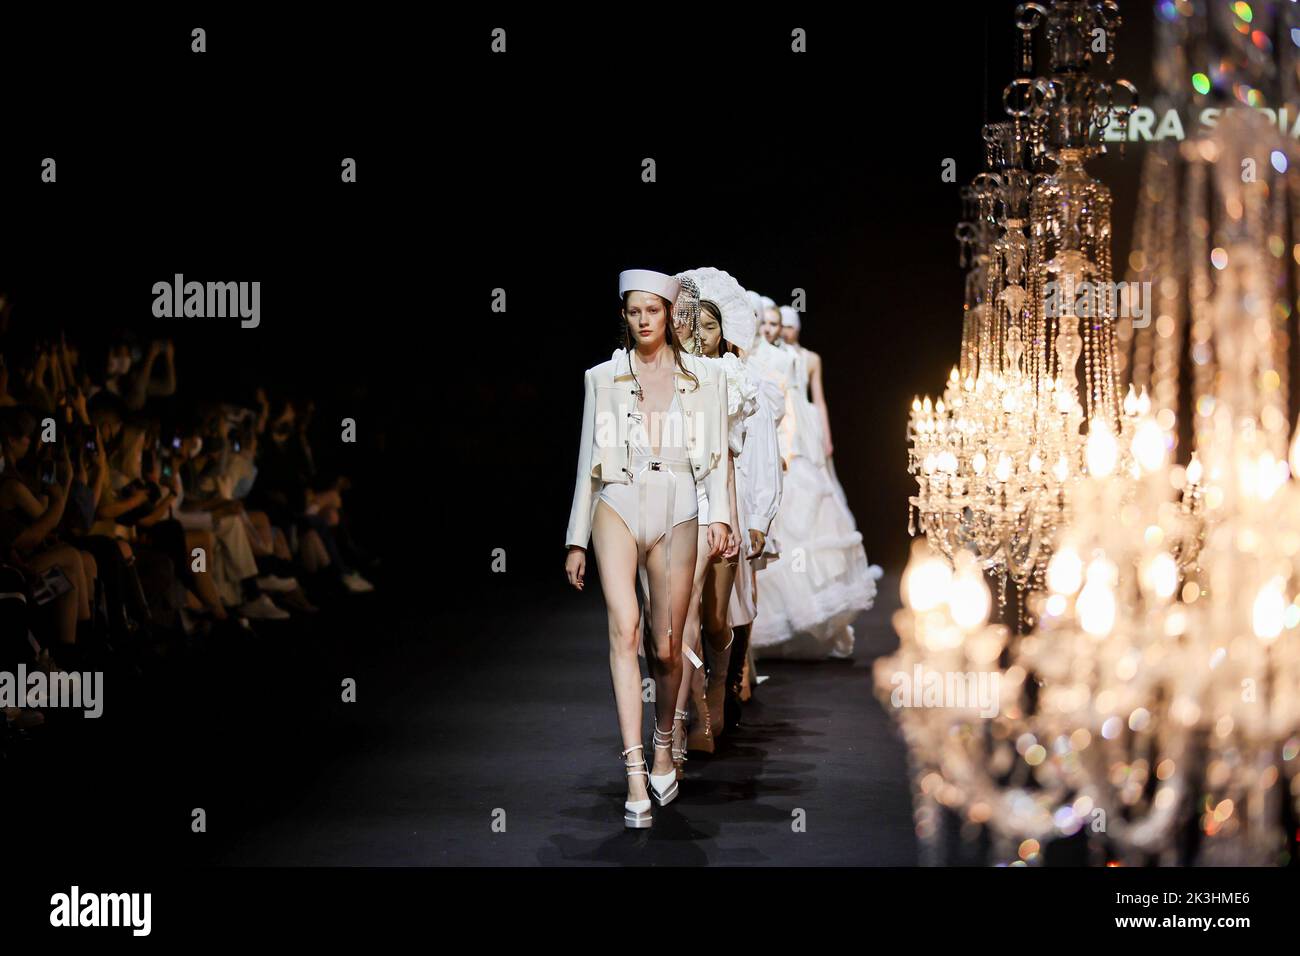 SHANGHAI, CHINA - 26 DE SEPTIEMBRE de 202 - VERA SERIASE ESPECIAL SHOW EN SS 2023 Shanghai Fashion Week en Shanghai, China, 26 de septiembre de 2022. Foto de stock